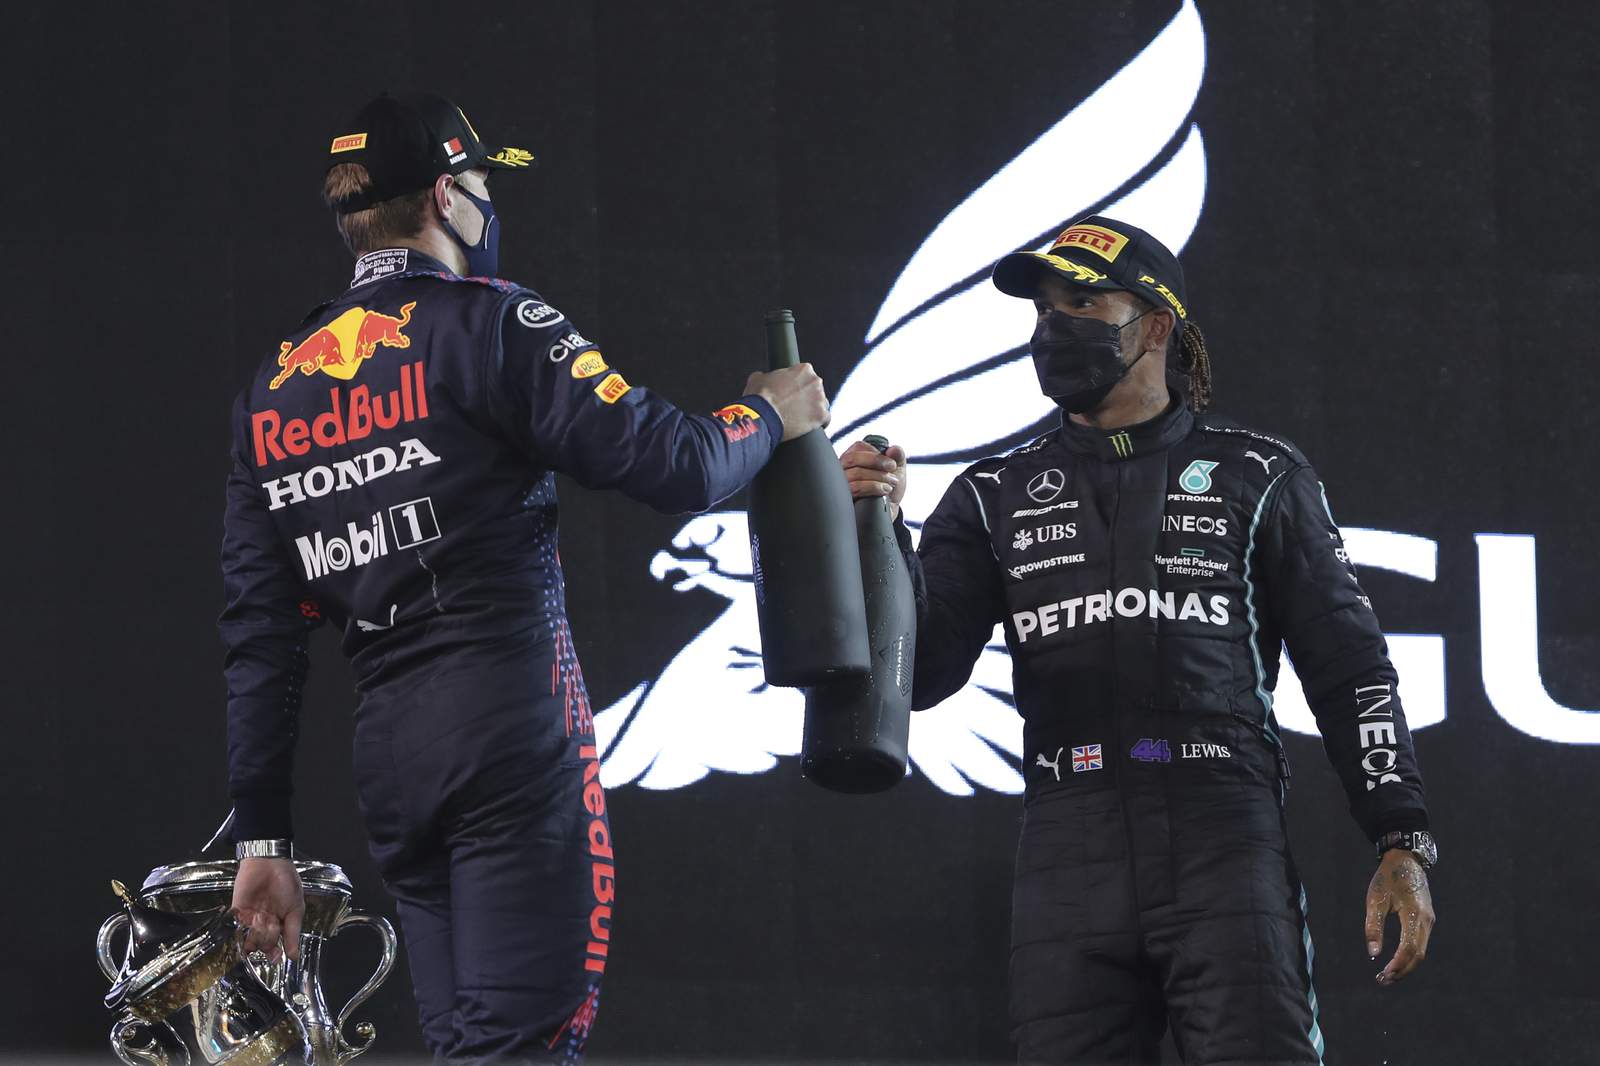 Hamilton holds off Verstappen to win tense F1 season-opener